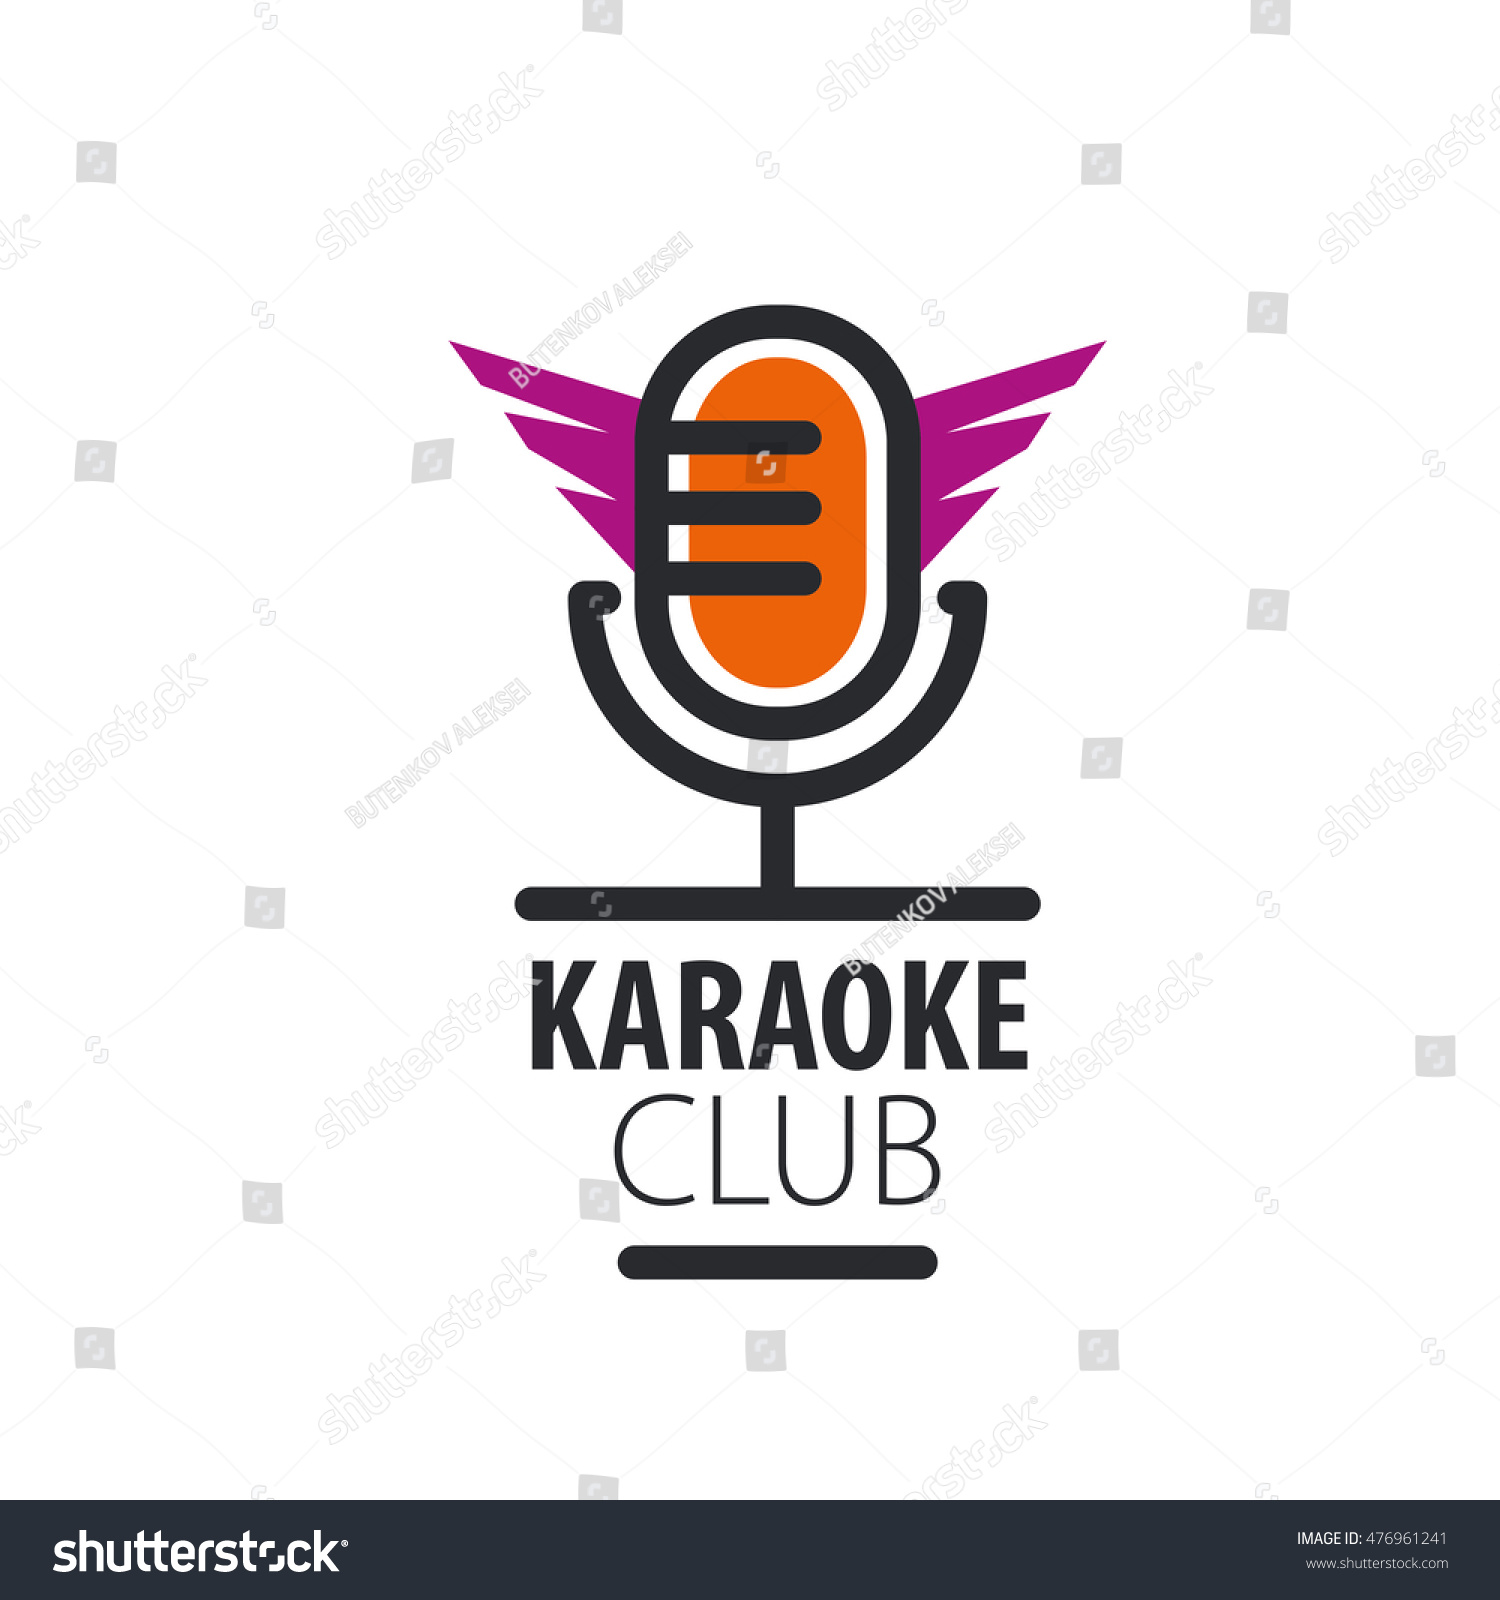 Vector Logo Karaoke - 476961241 : Shutterstock